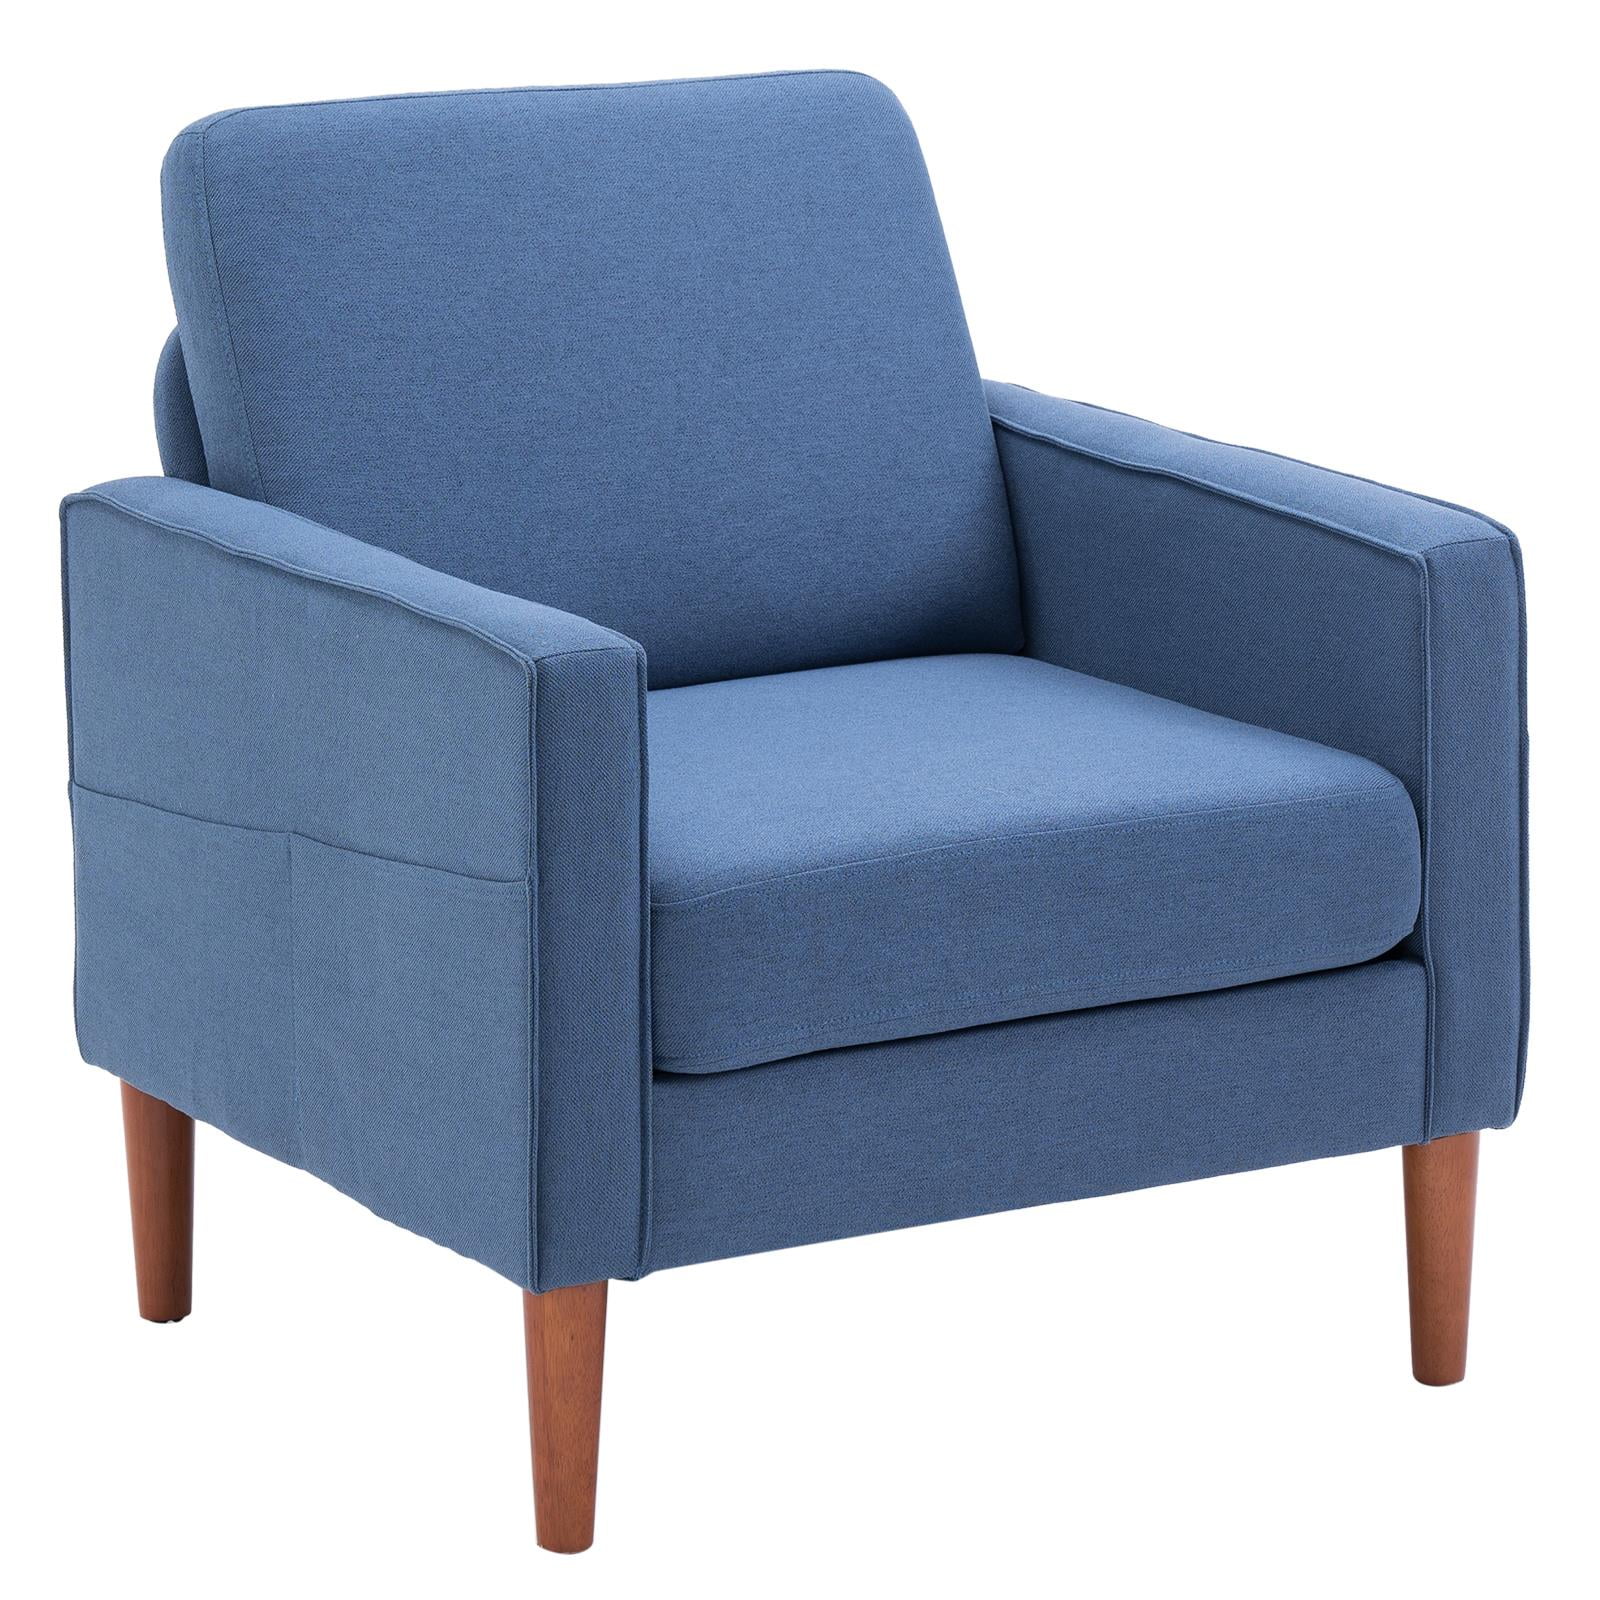 Ktaxon Modern Single Sofa Chair Club